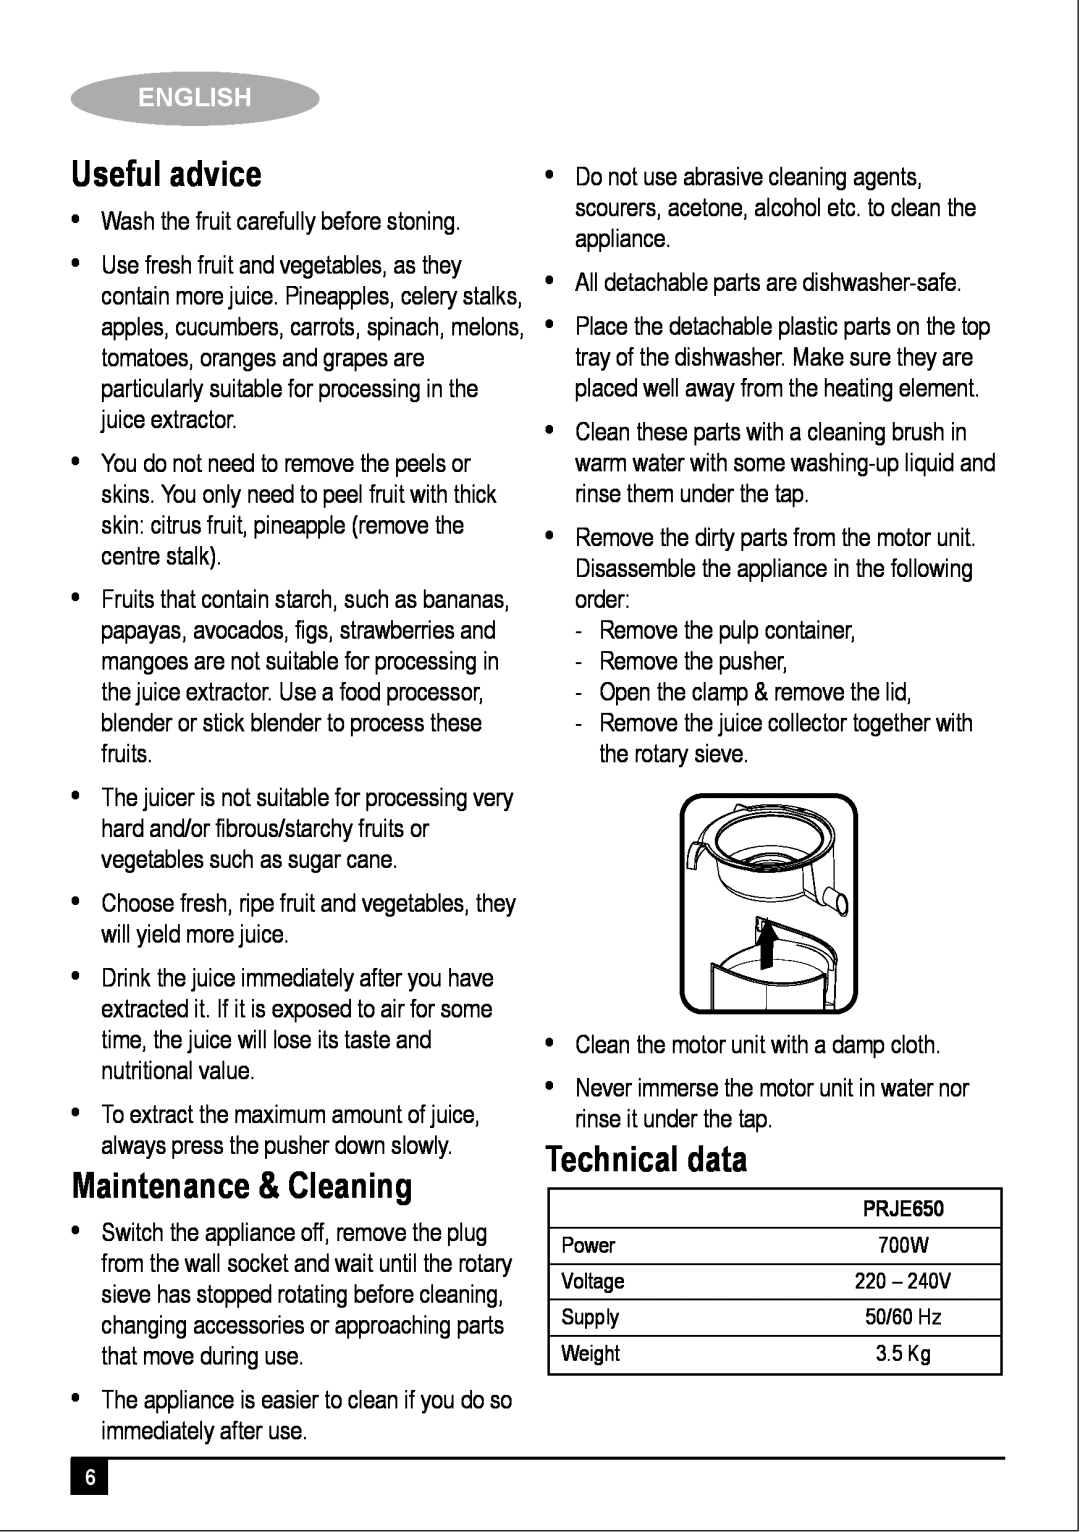 Black & Decker PRJE650 manual Useful advice, Maintenance & Cleaning, Technical data, English 